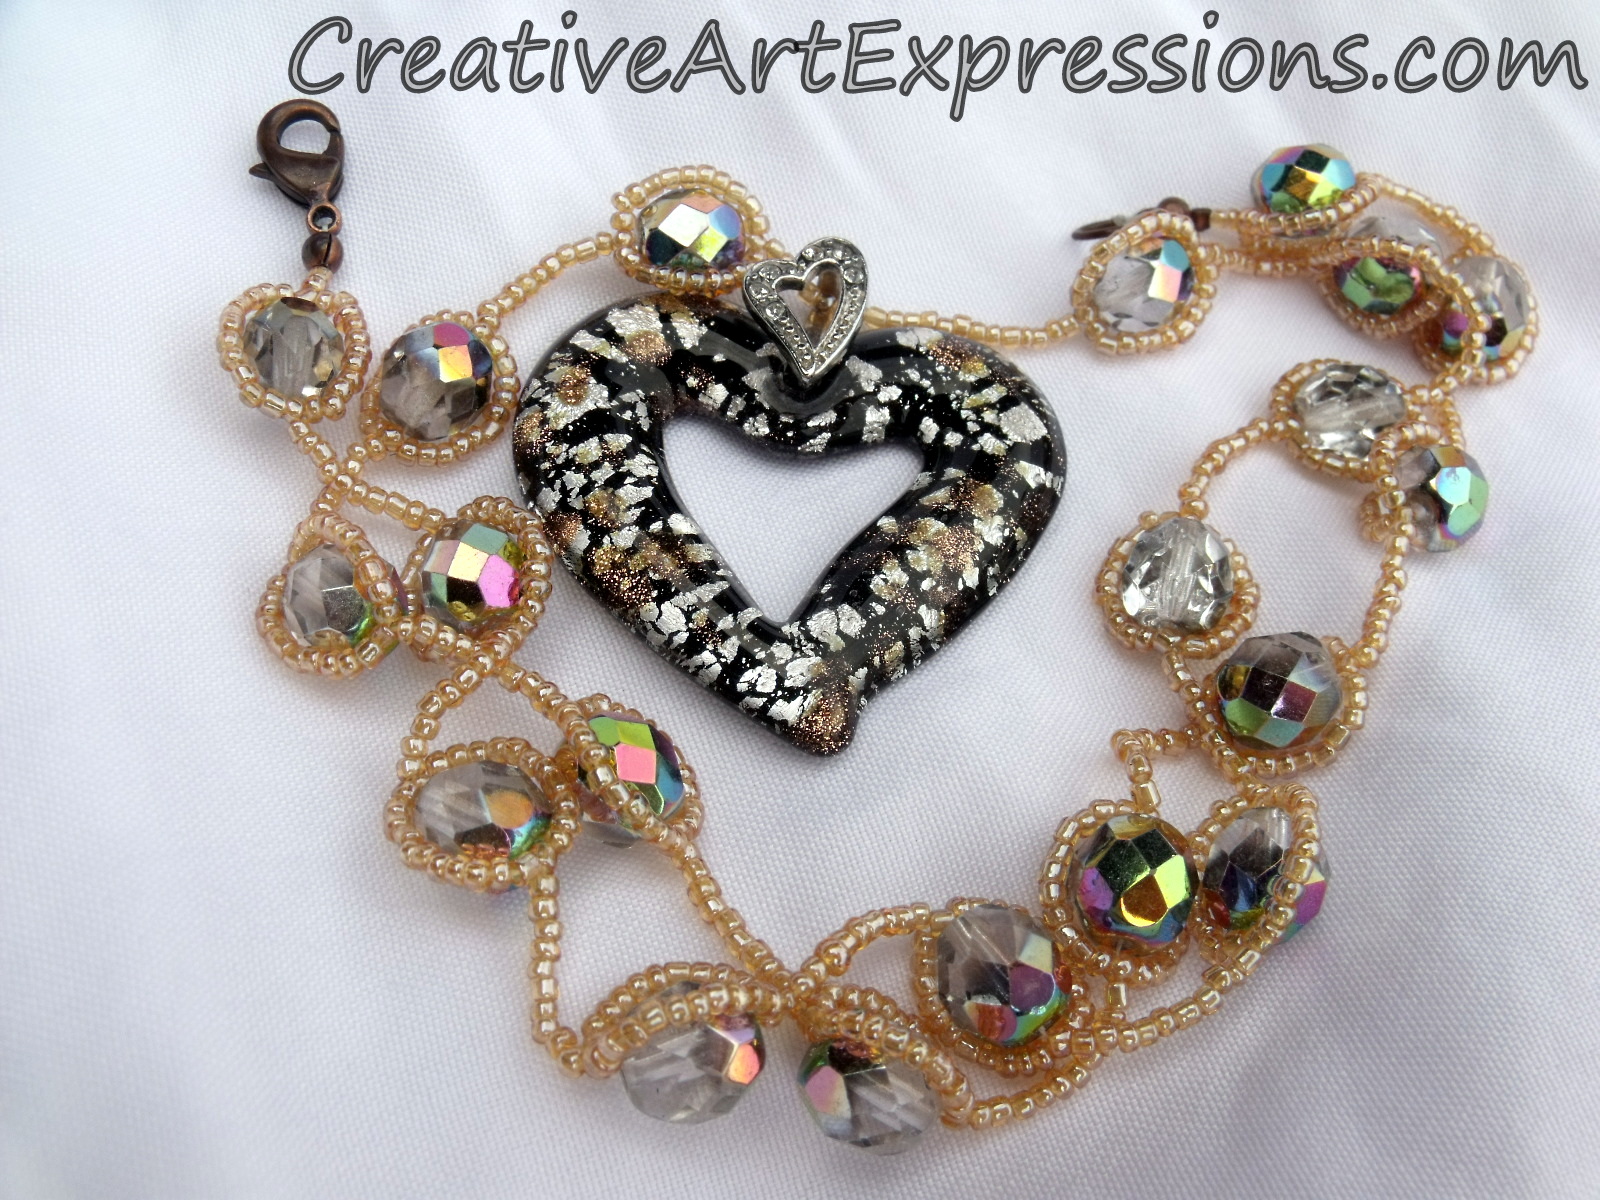 Creative Art Expressions Peach & Black Daisy Chain Necklace Jewelry Design